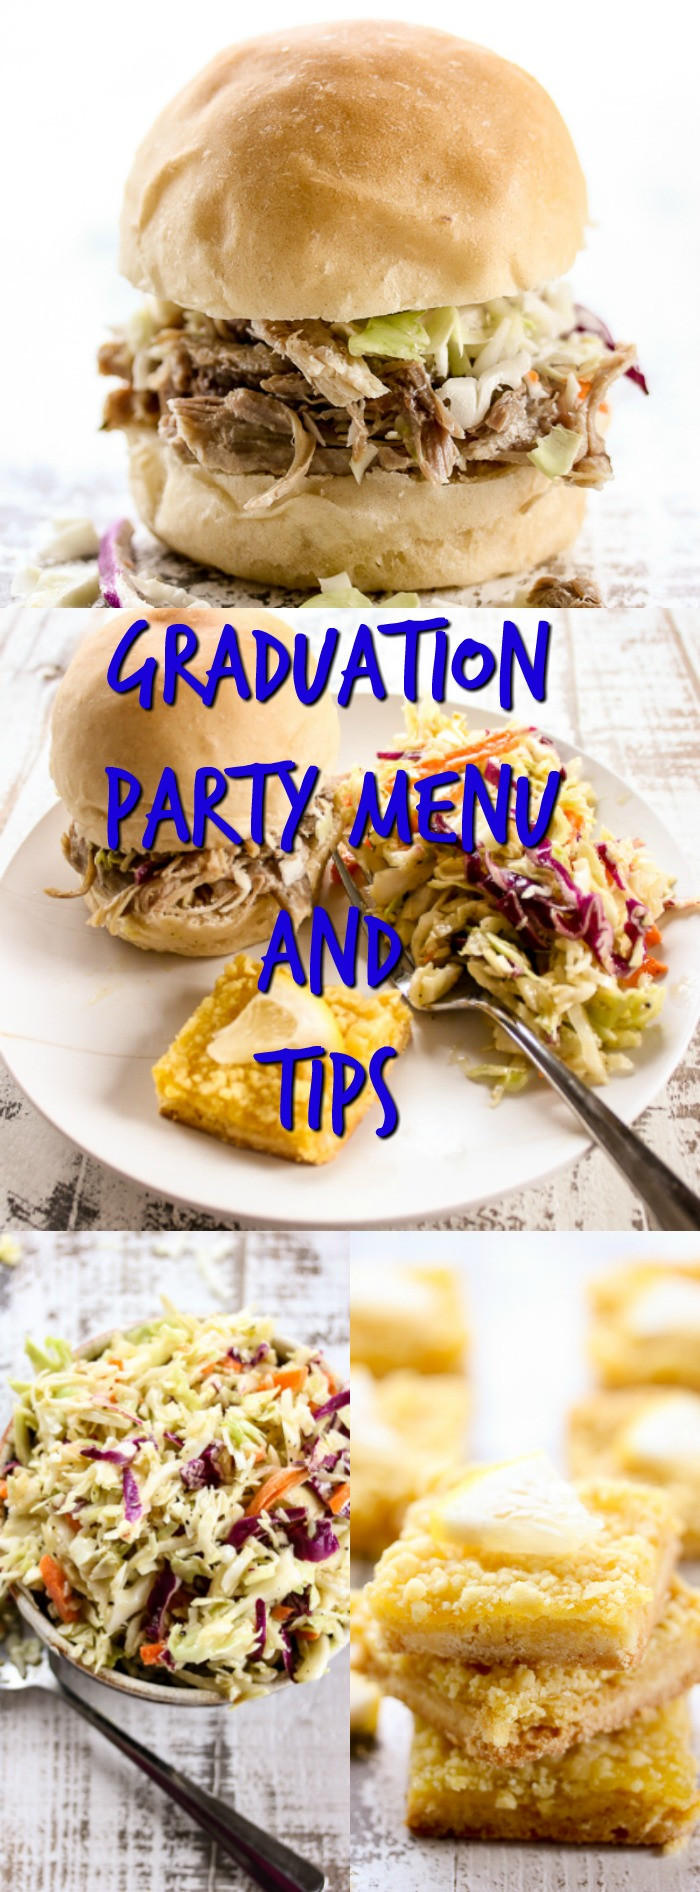 Graduation Party Menus Ideas
 Graduation Party Menu and Tips Lisa s Dinnertime Dish